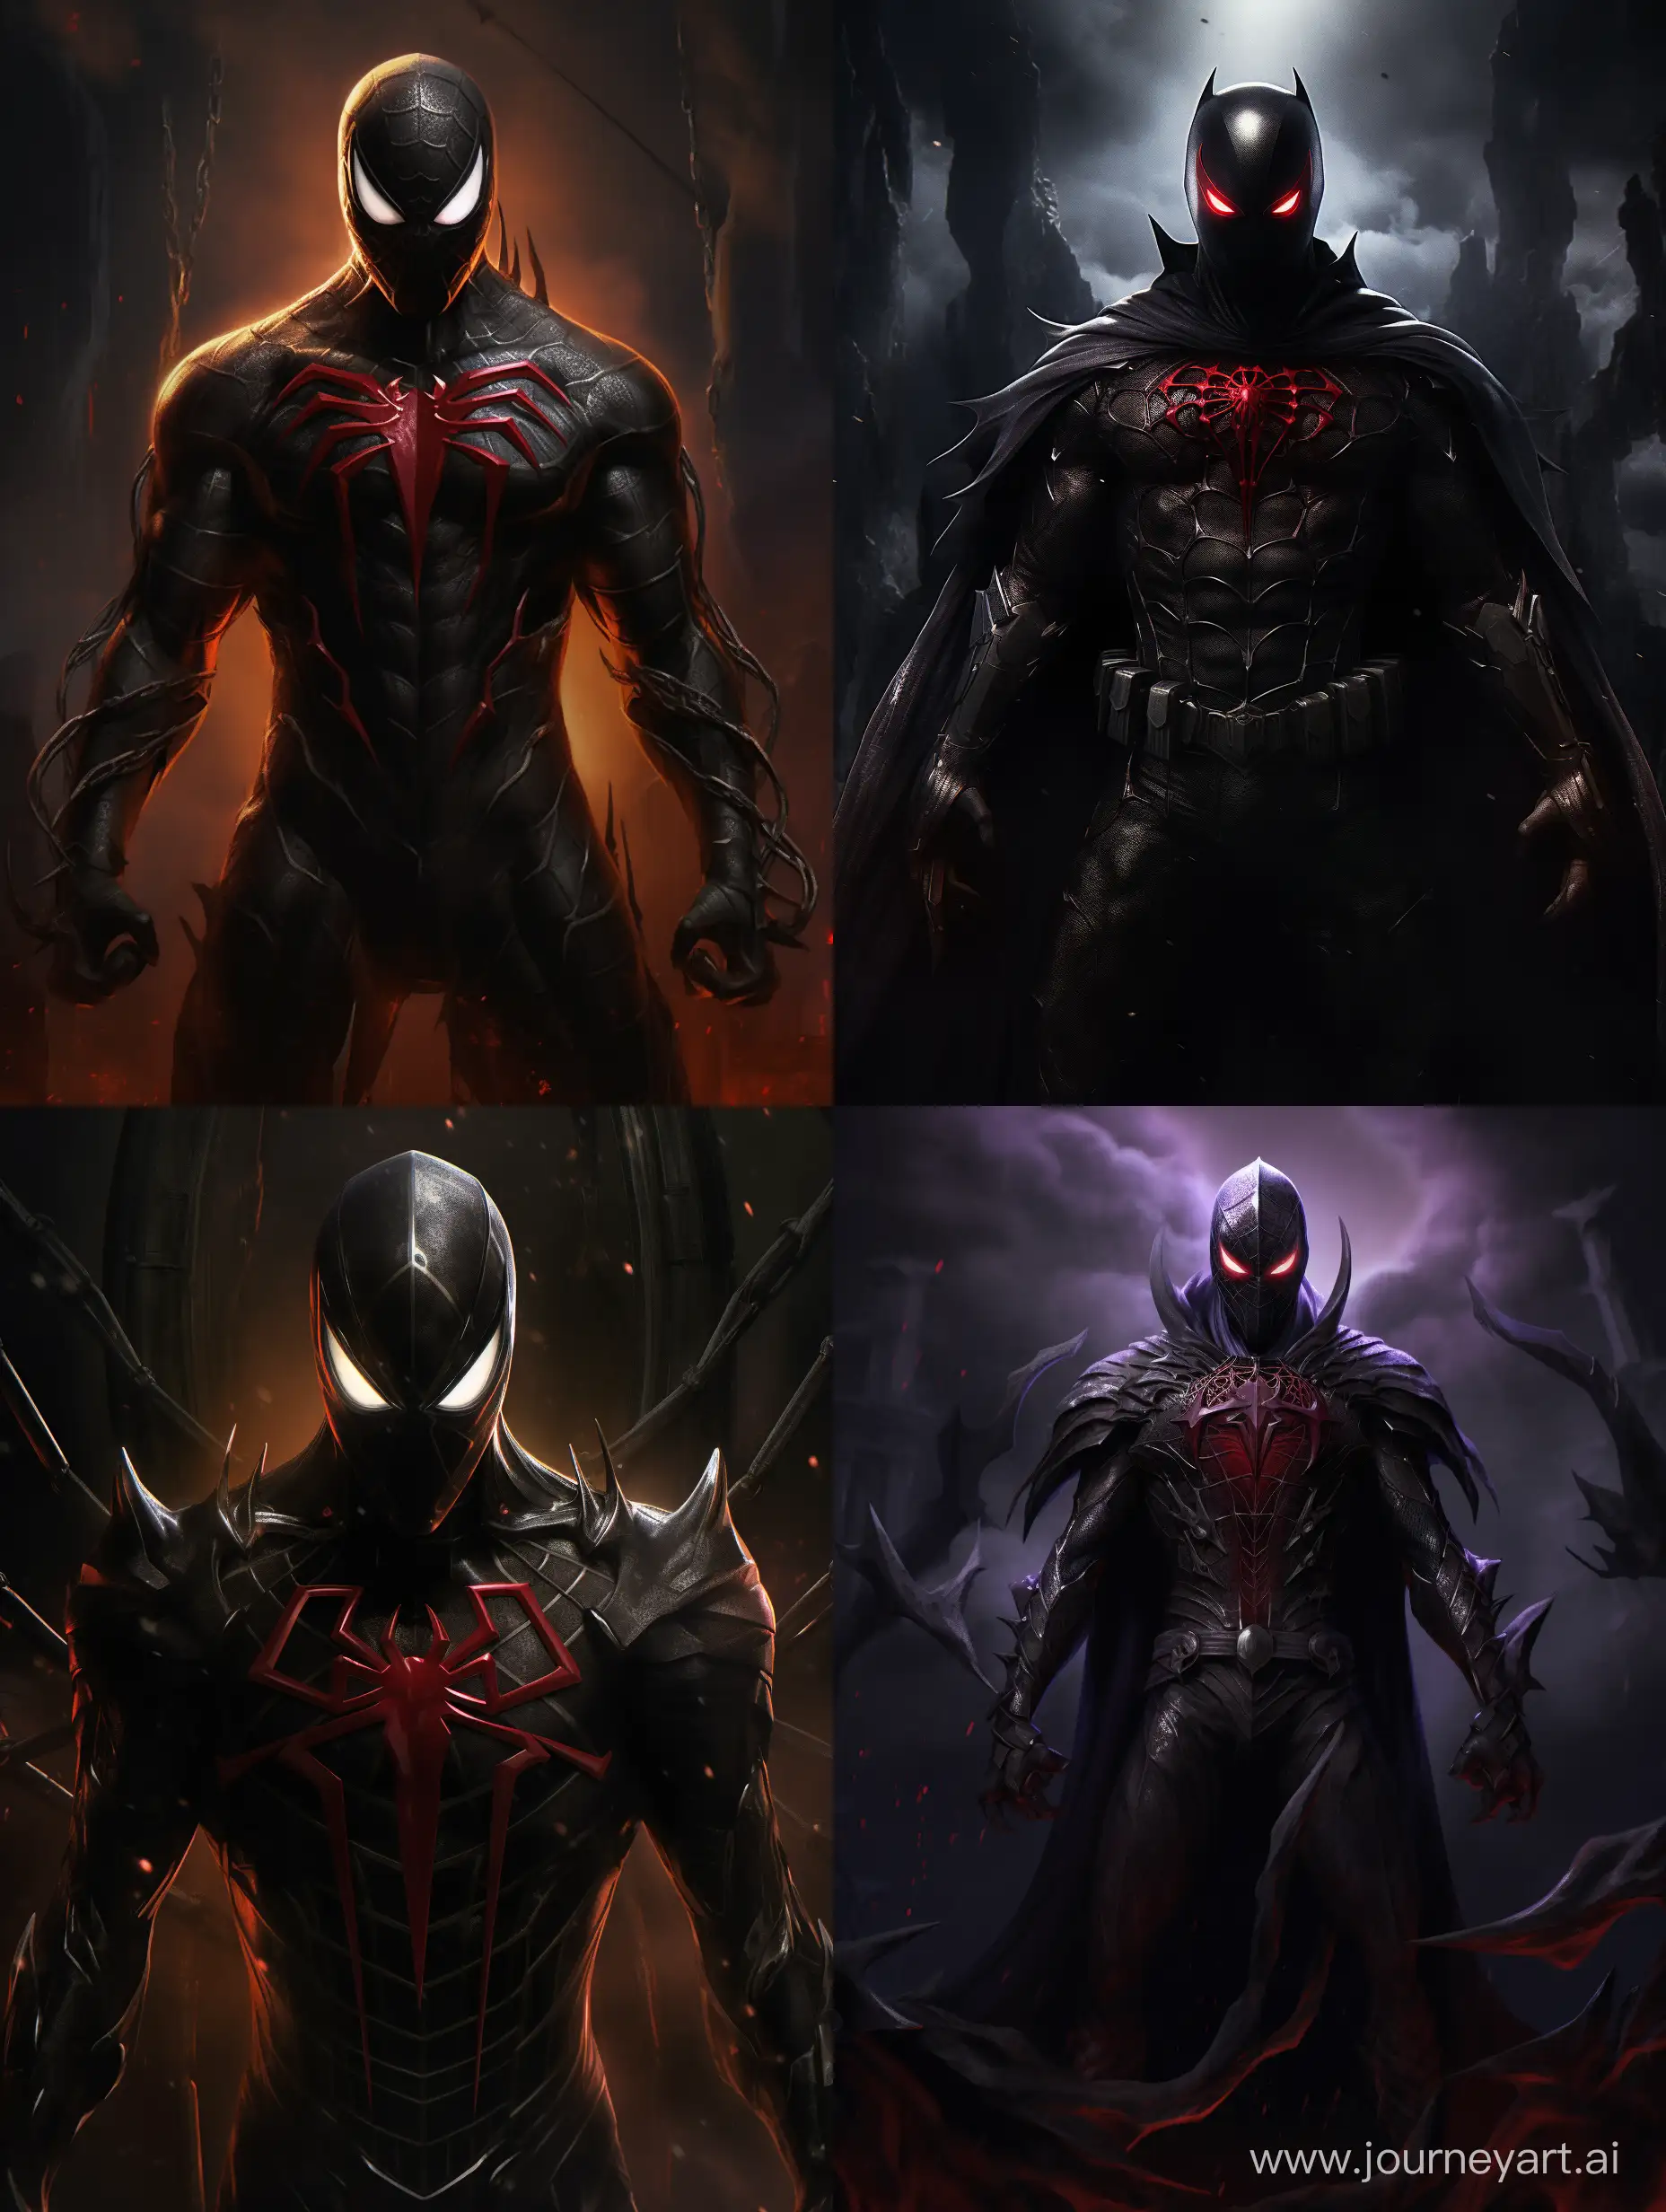 Sinister-SpiderMan-A-Dark-Villain-in-34-Aspect-Ratio